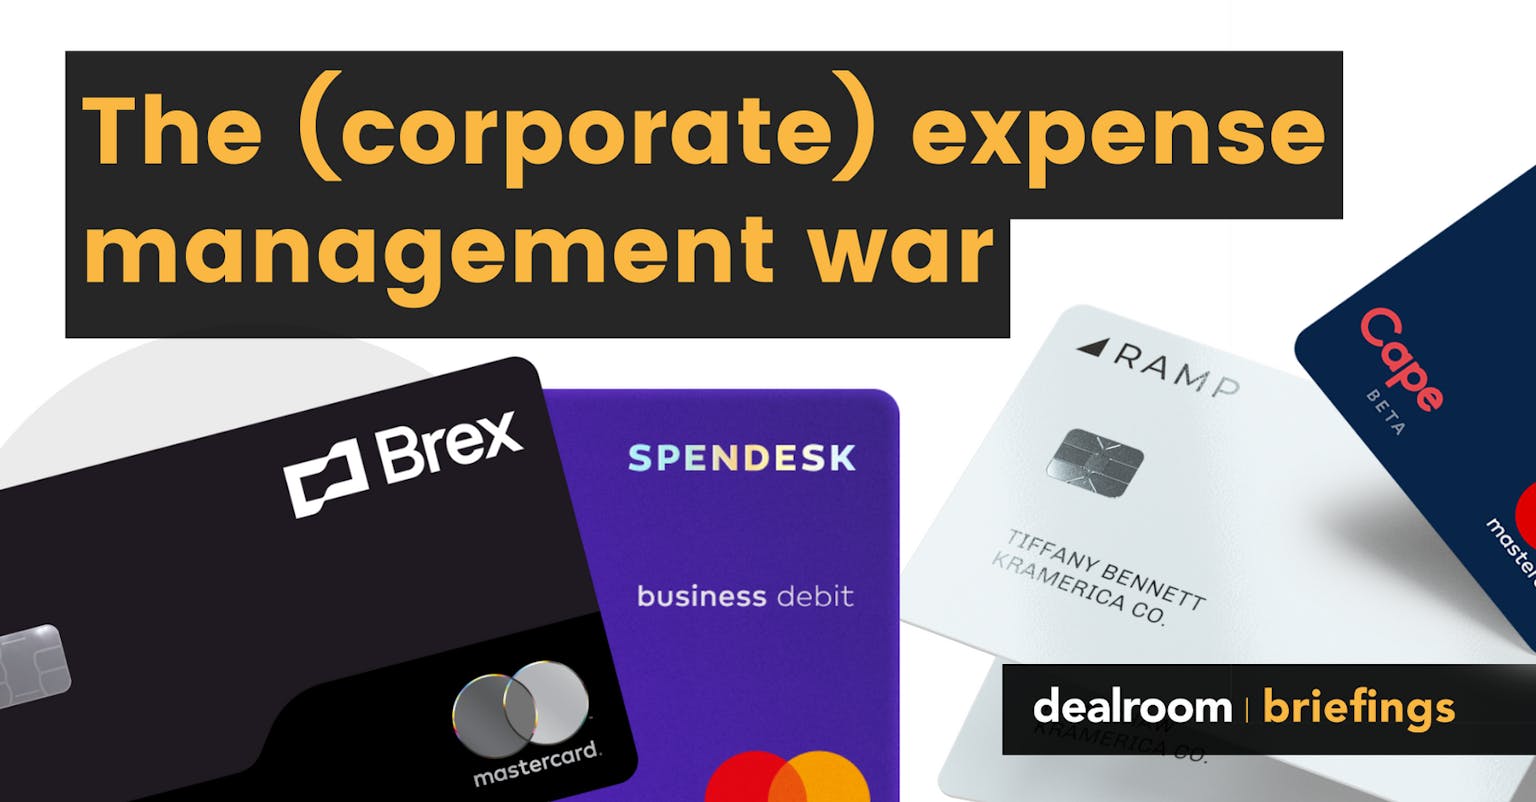 The corporate expense management war, a Dealroom deep dive